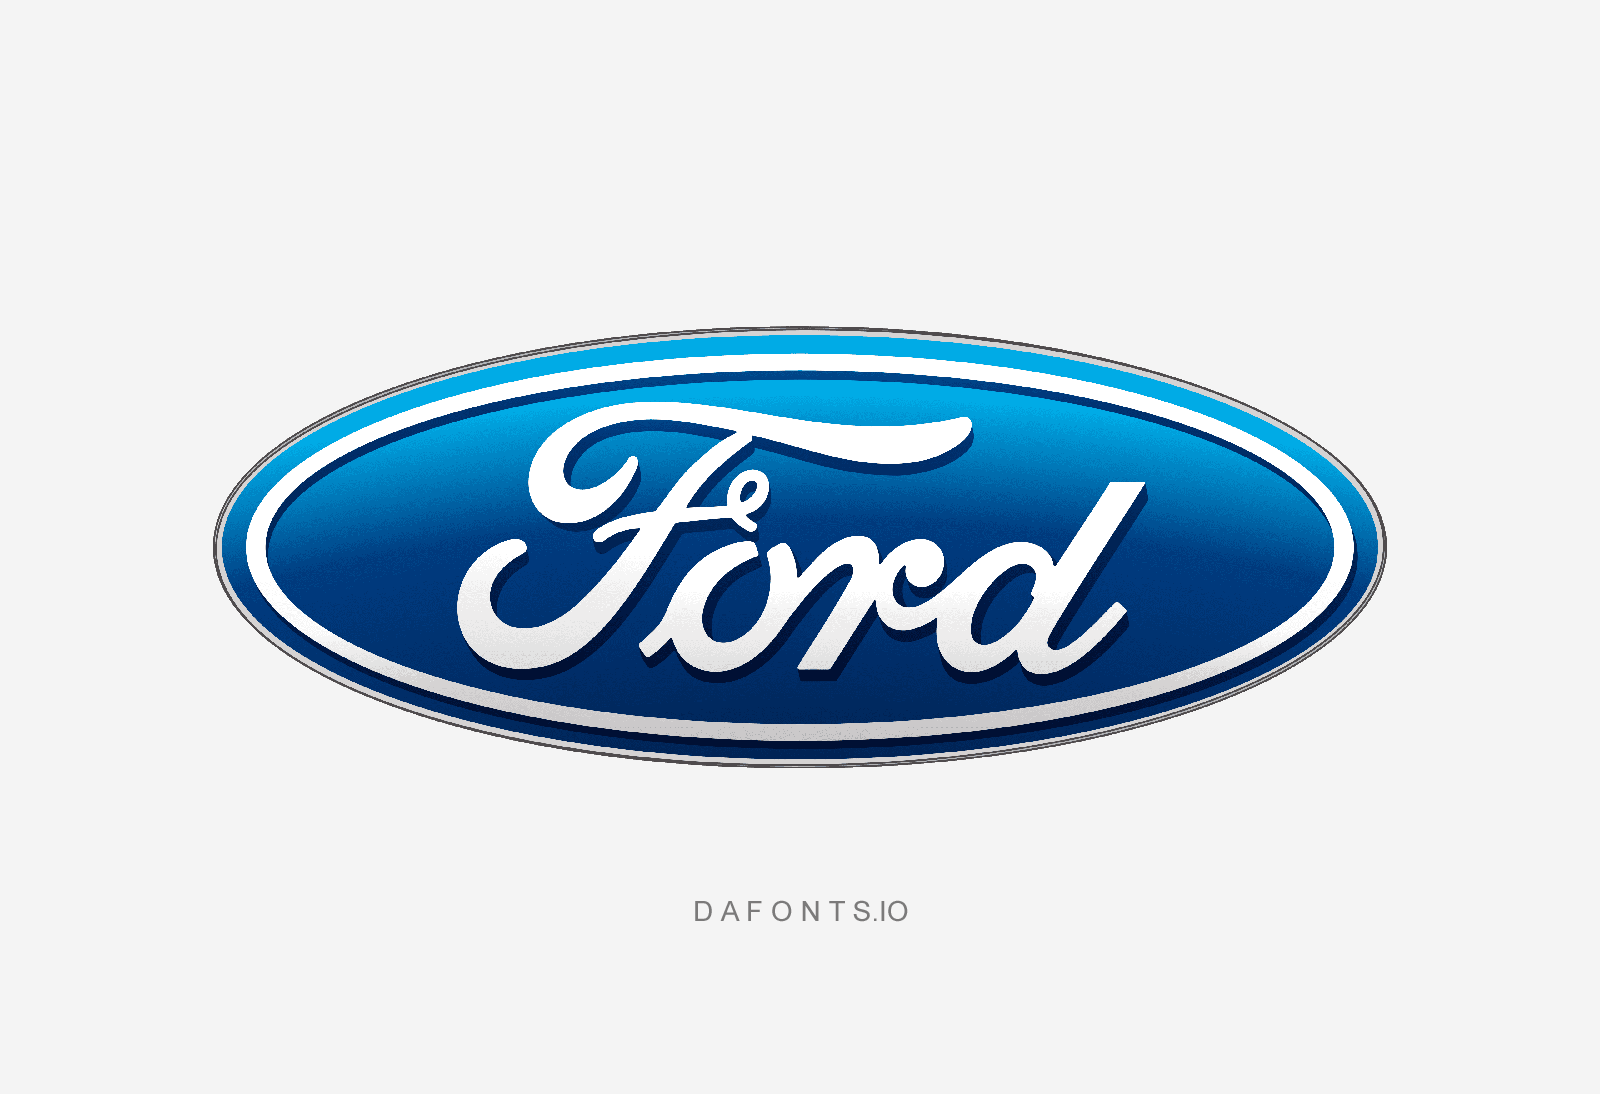 Ford-Logo-Font